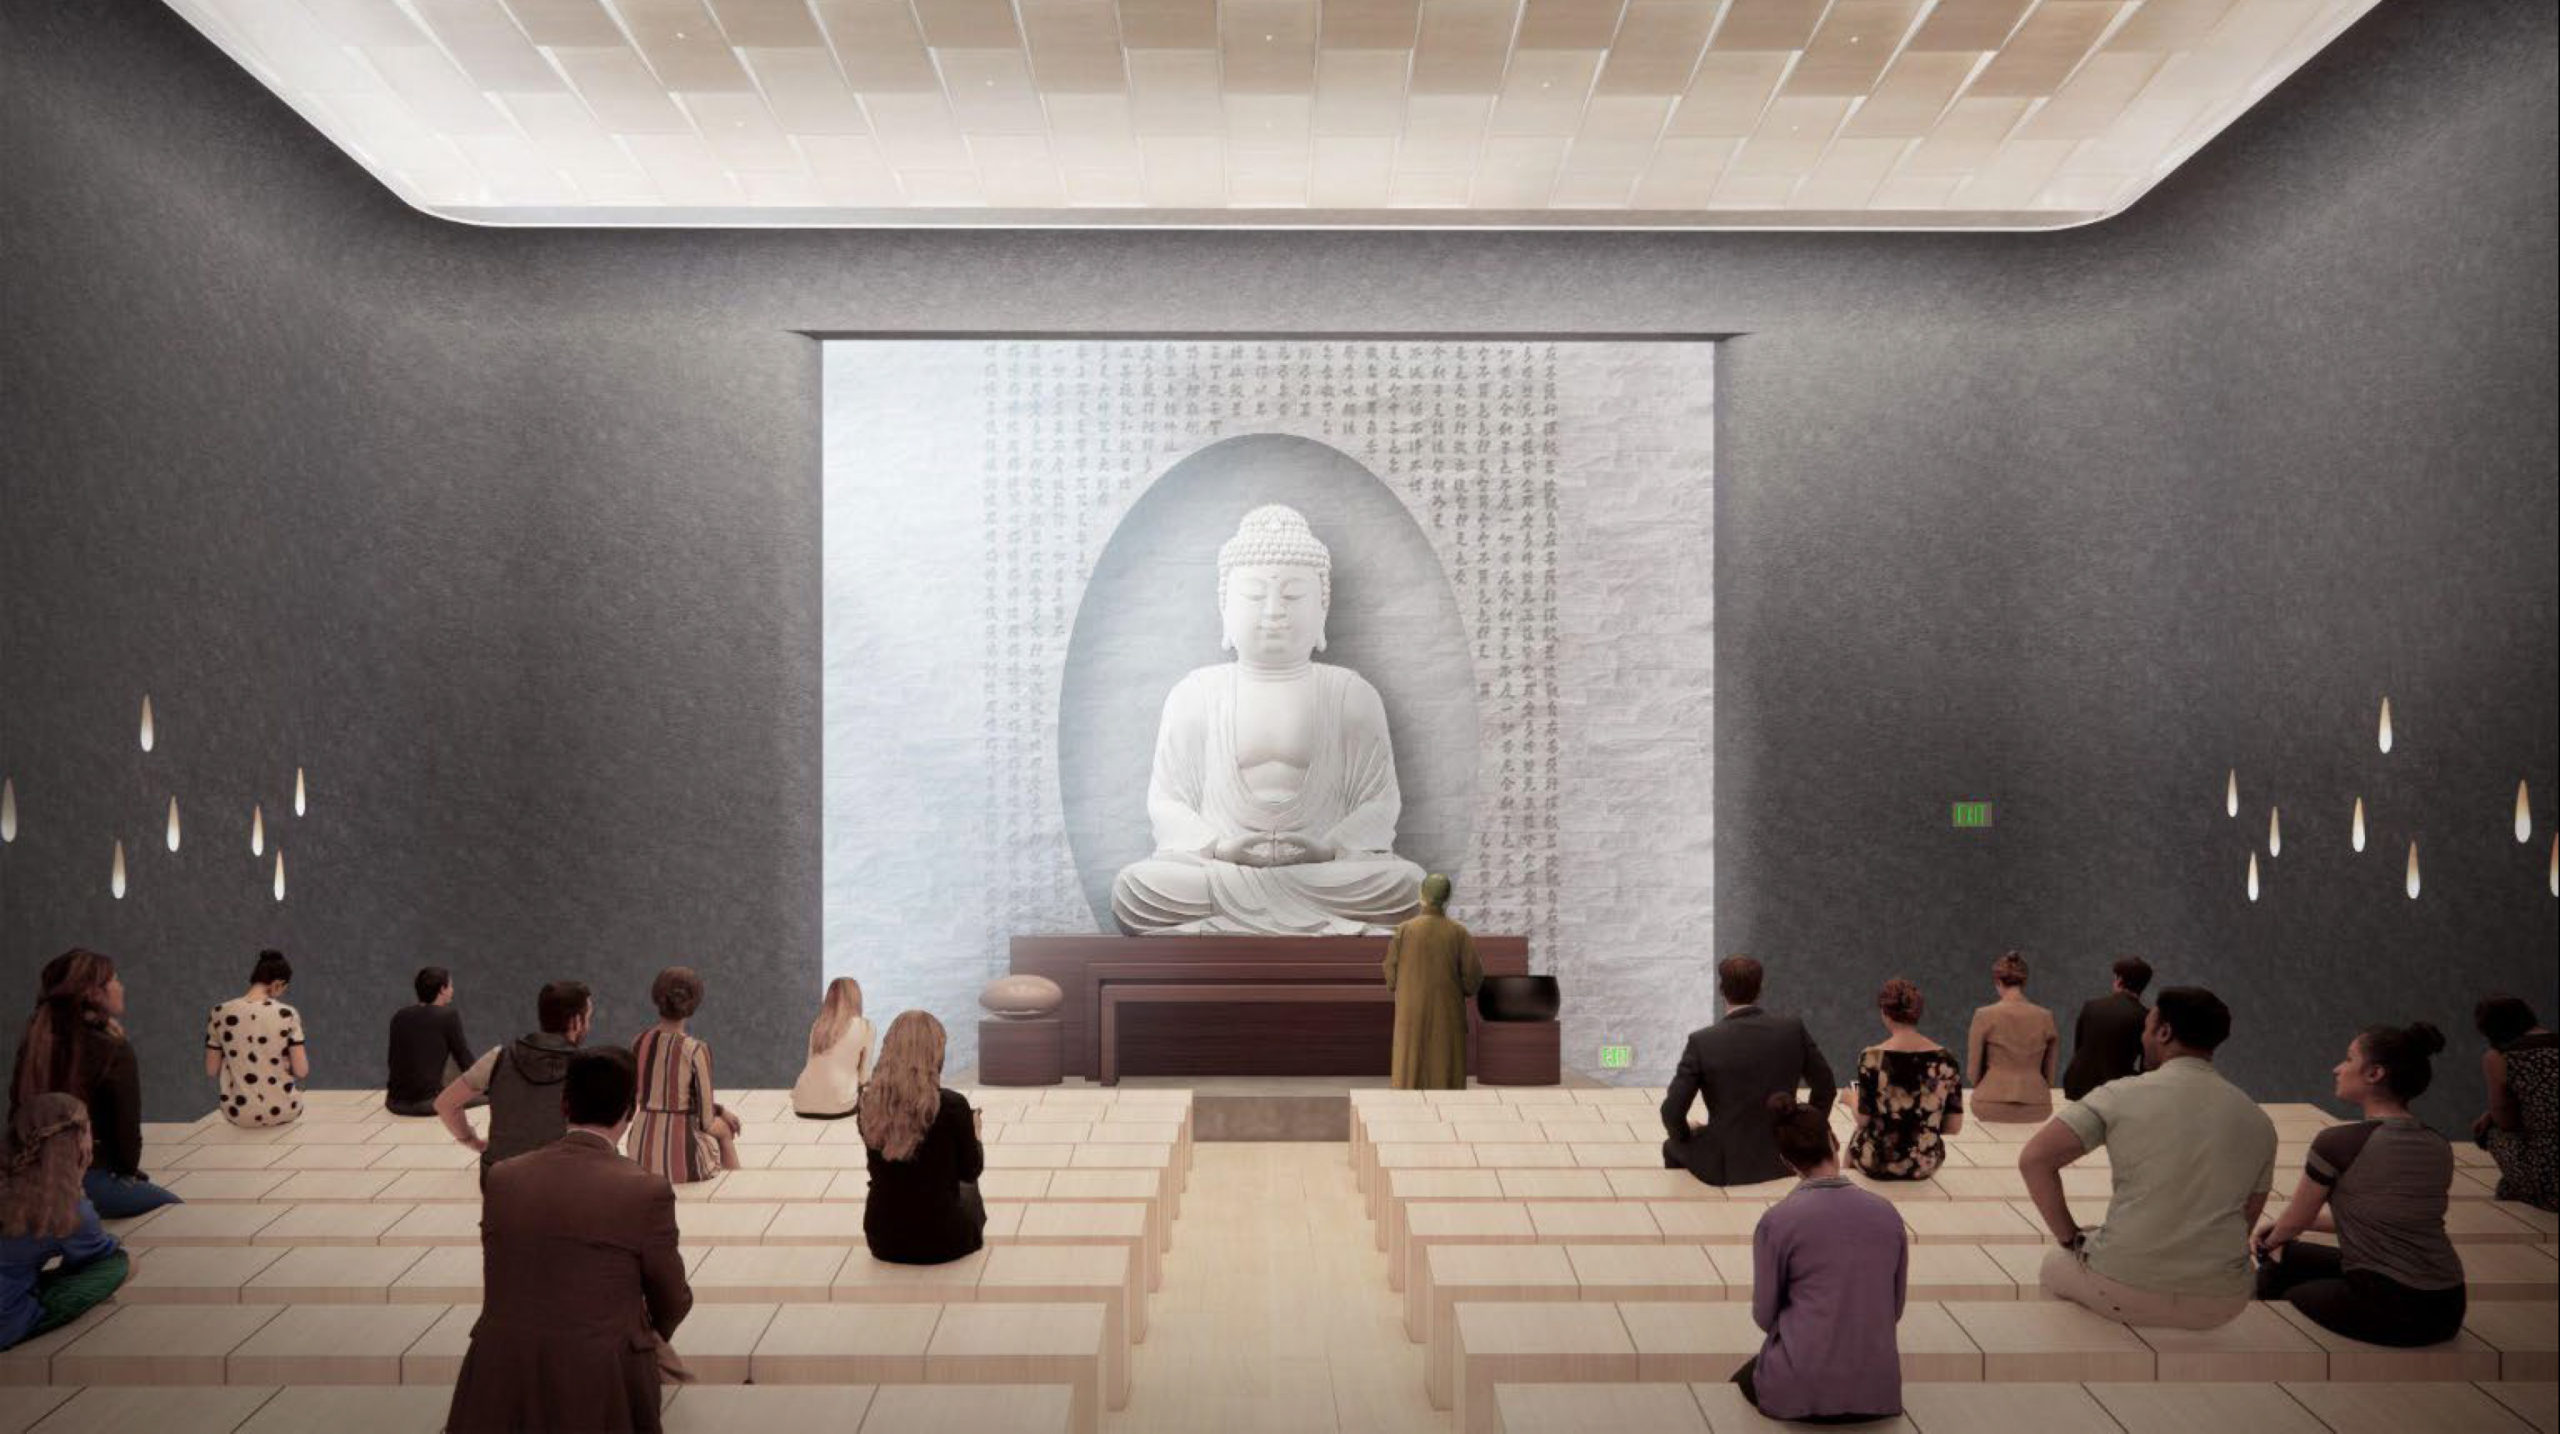 The San Bao Temple at 1750 Van Ness Avenue main shrine room, rendering by Skidmore, Owings & Merrill